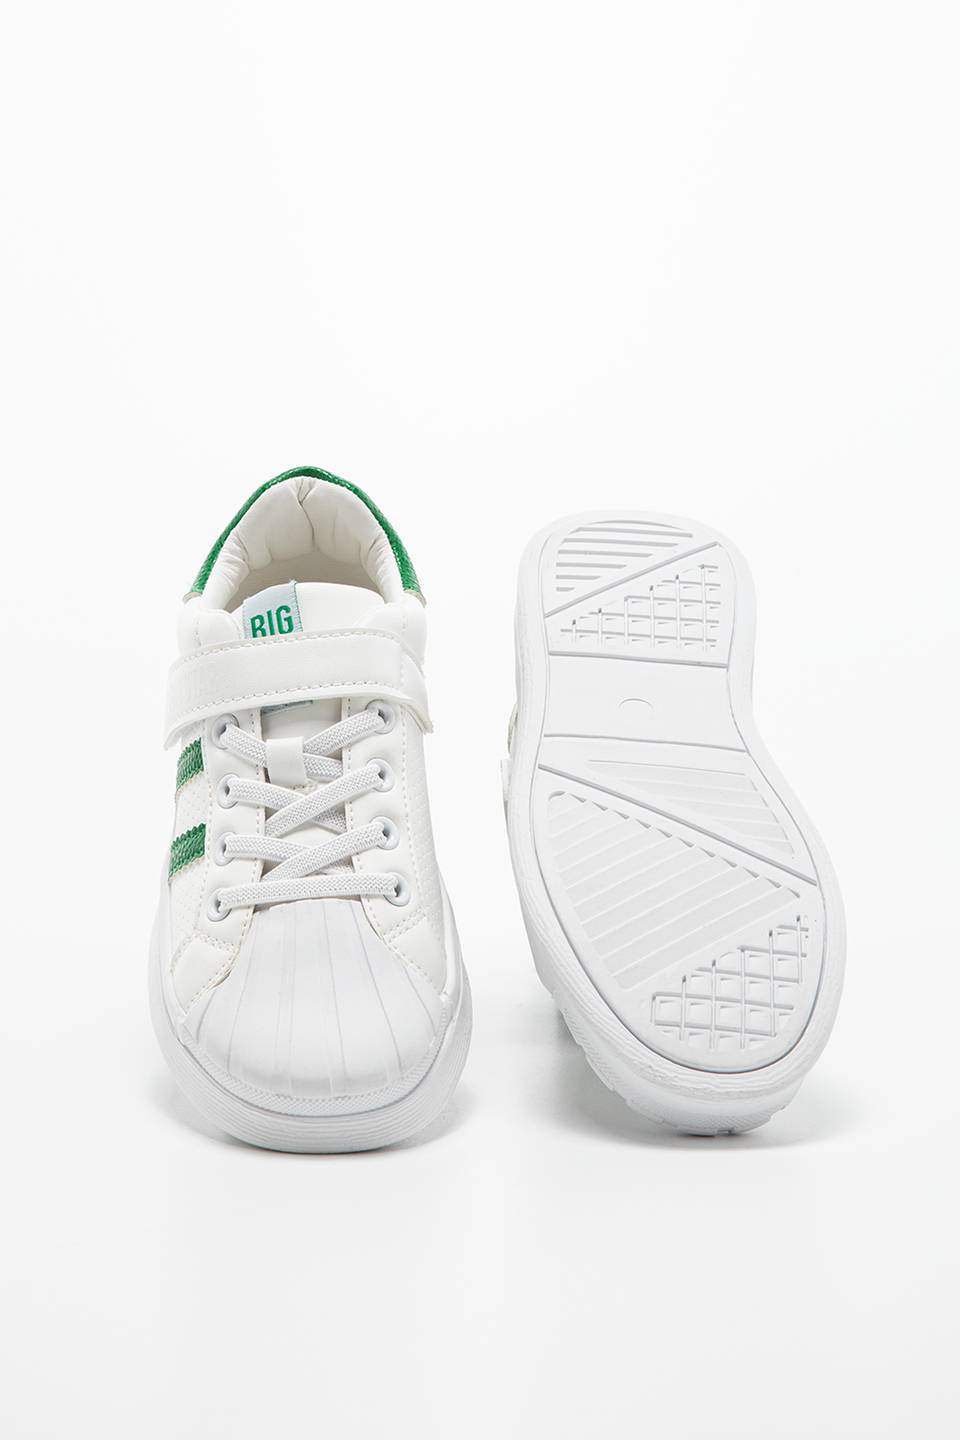 Sneakers Big Star GG374019-WHITE/GREEN